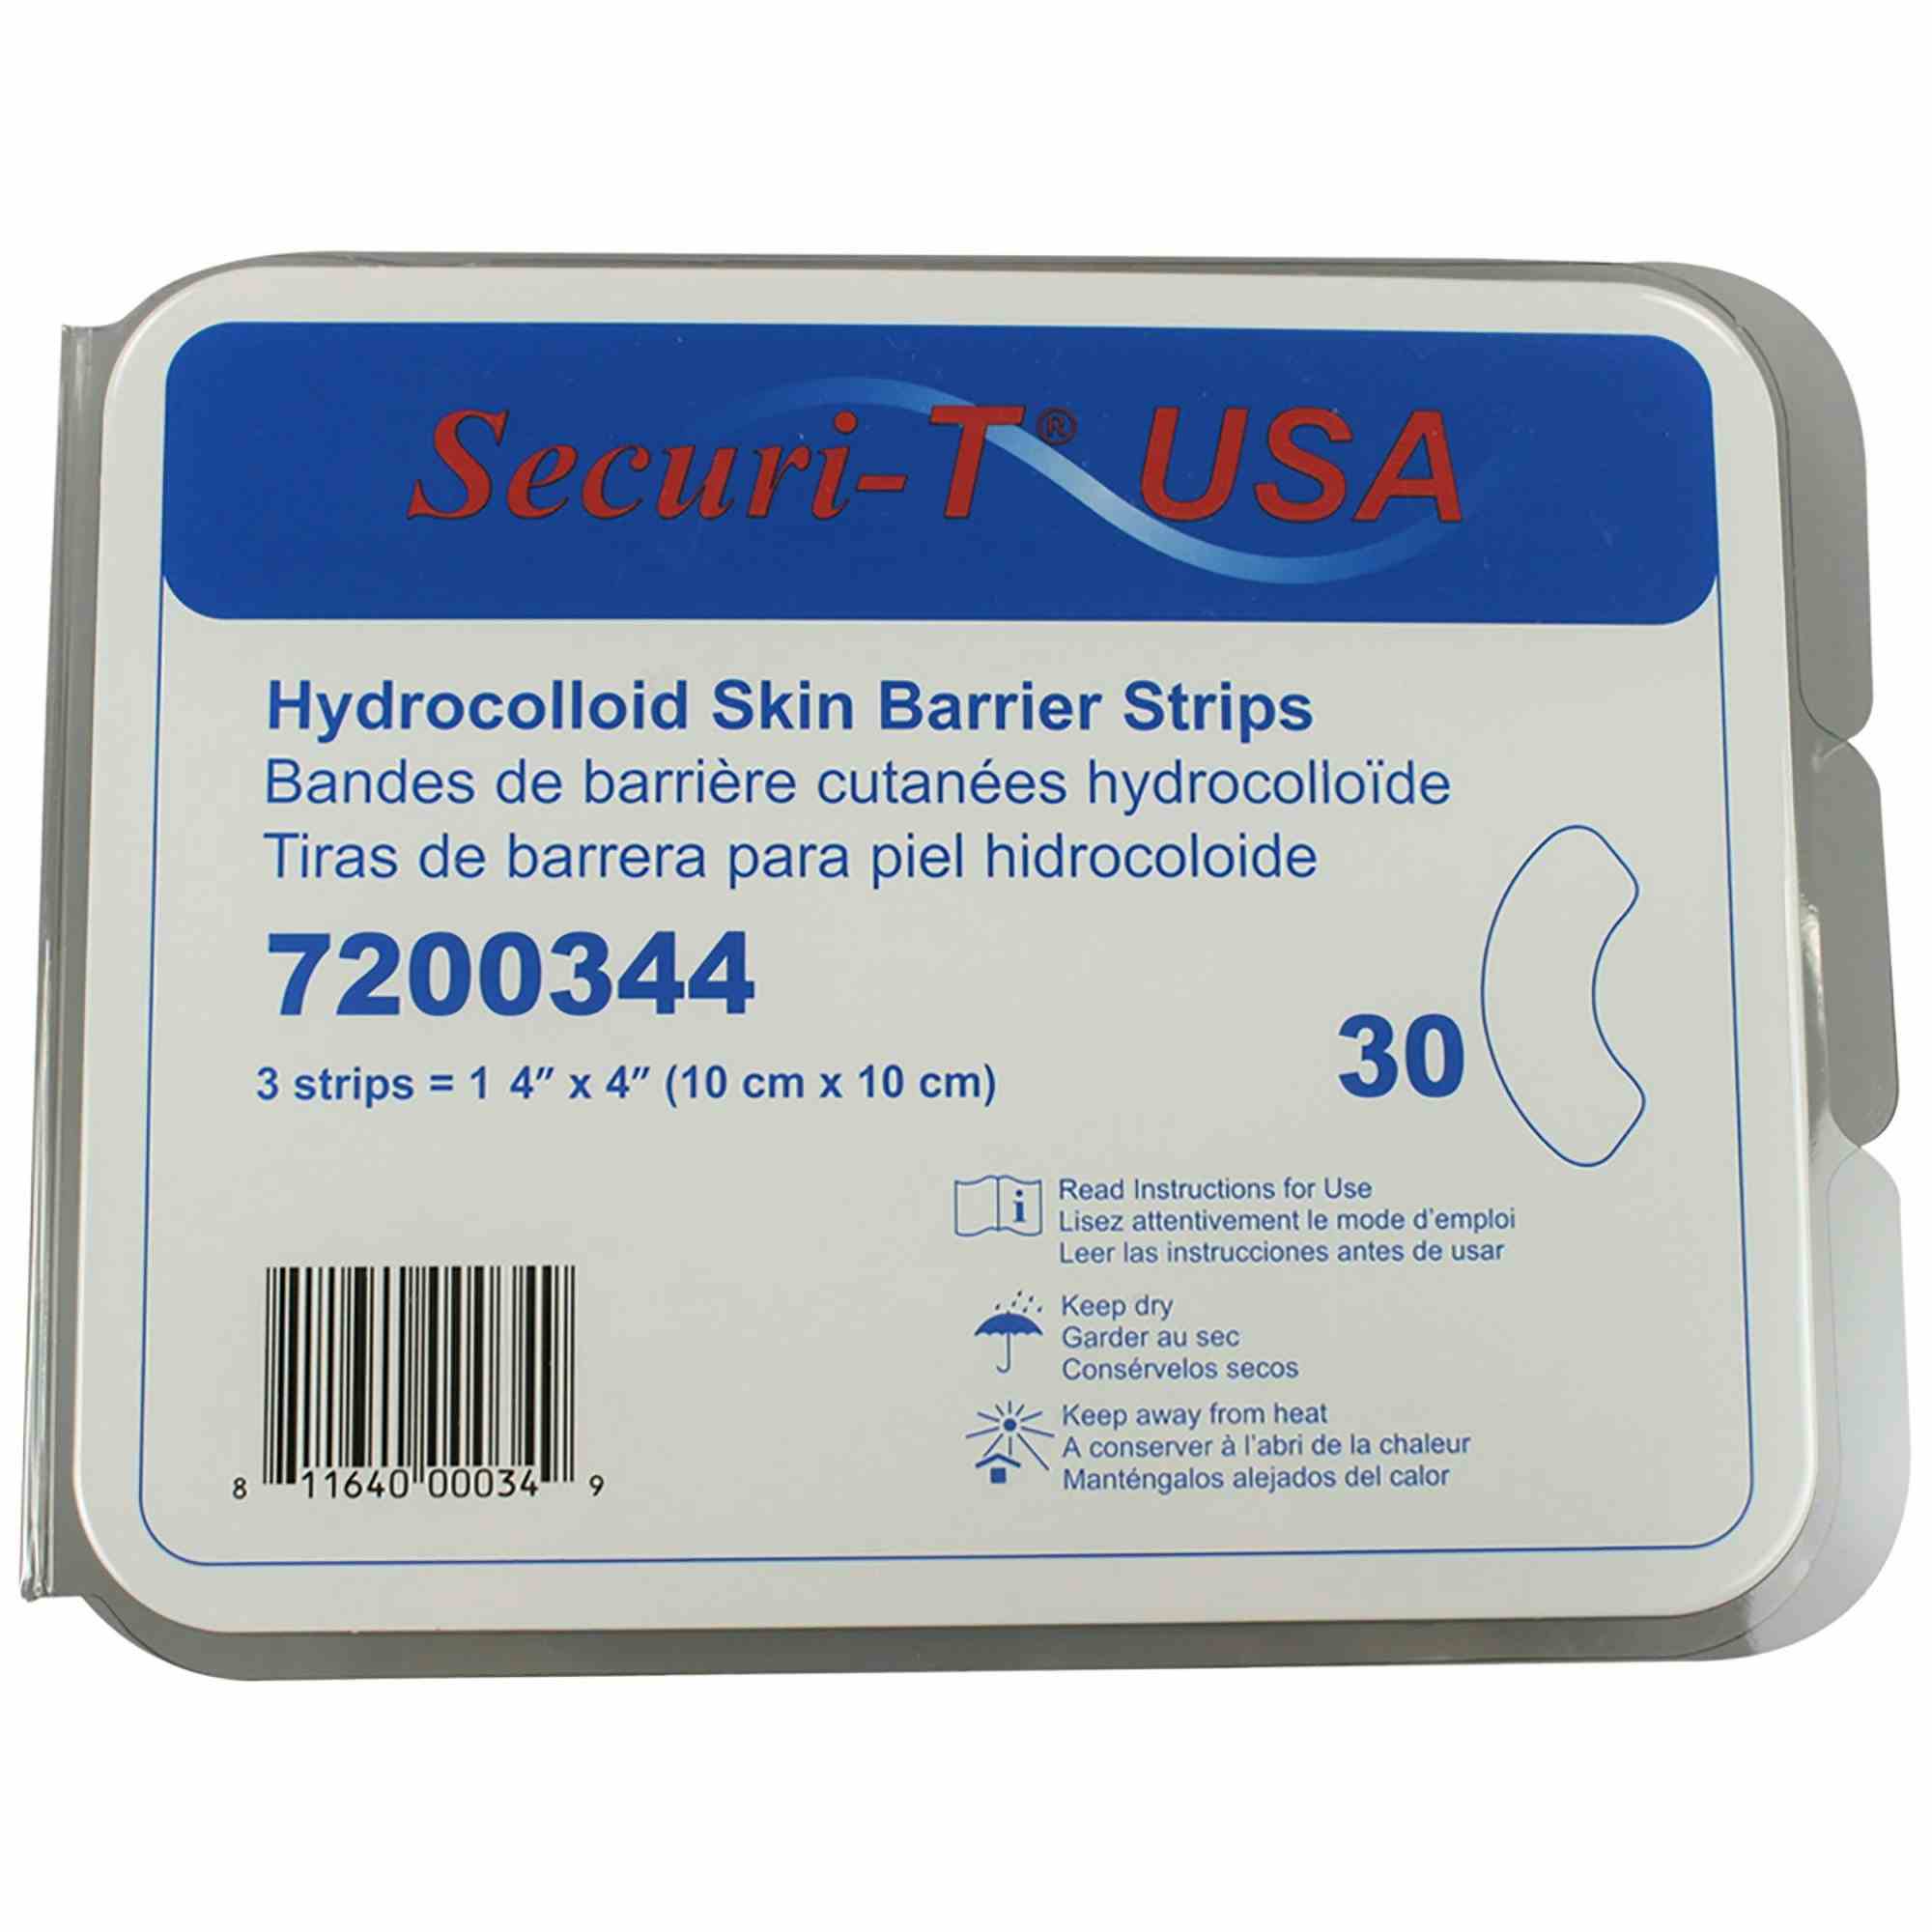 Securi-T USA Hydrocolloid Skin Barrier Strip, 4 X 4", 7200344, Box of 30